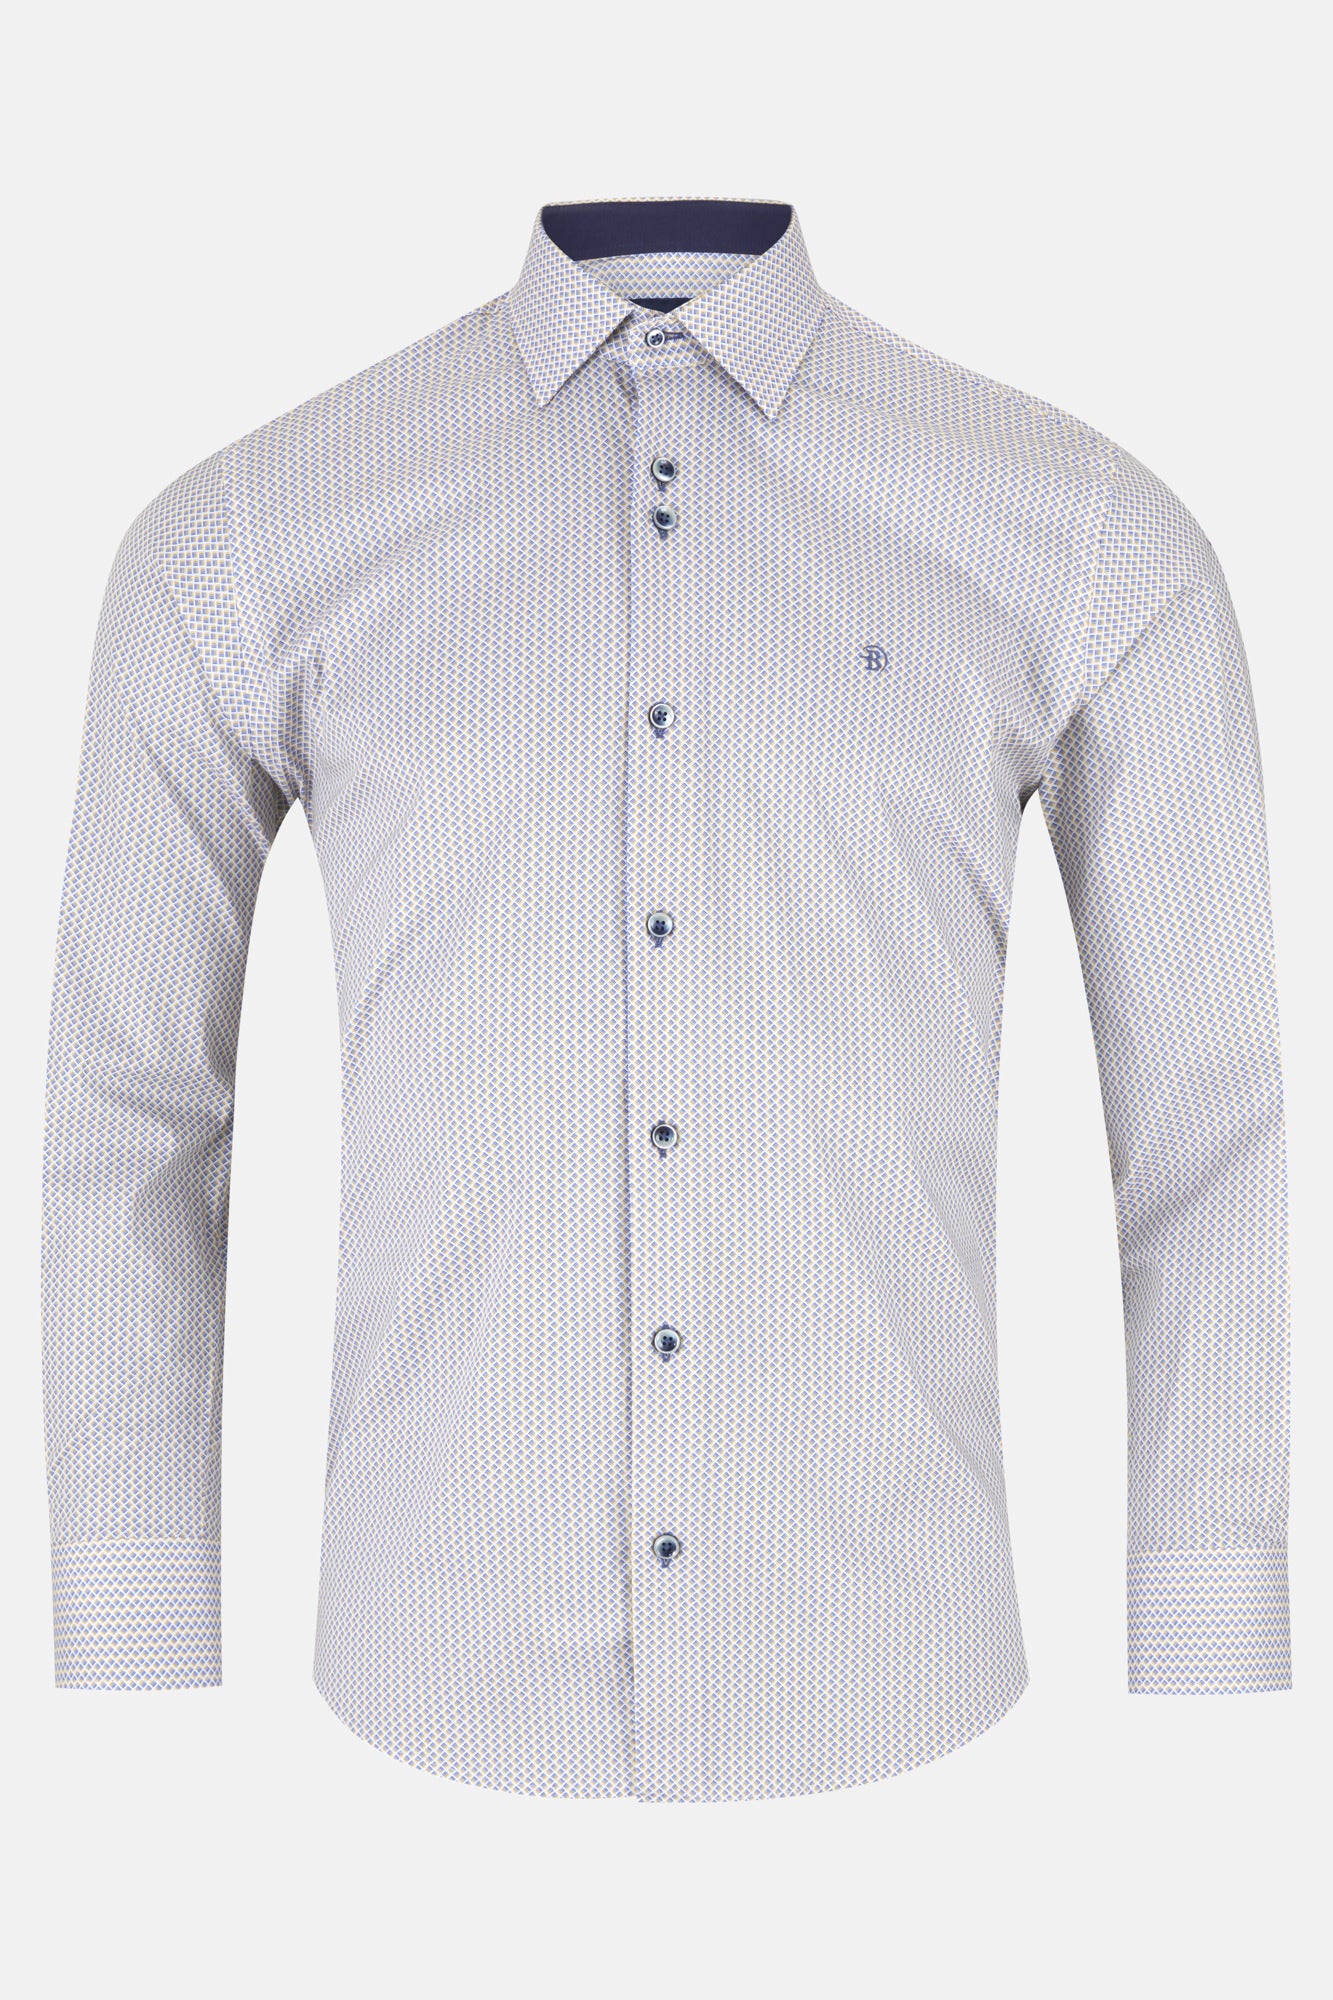 Luke Stone L/S Shirt By Benetti Menswear 